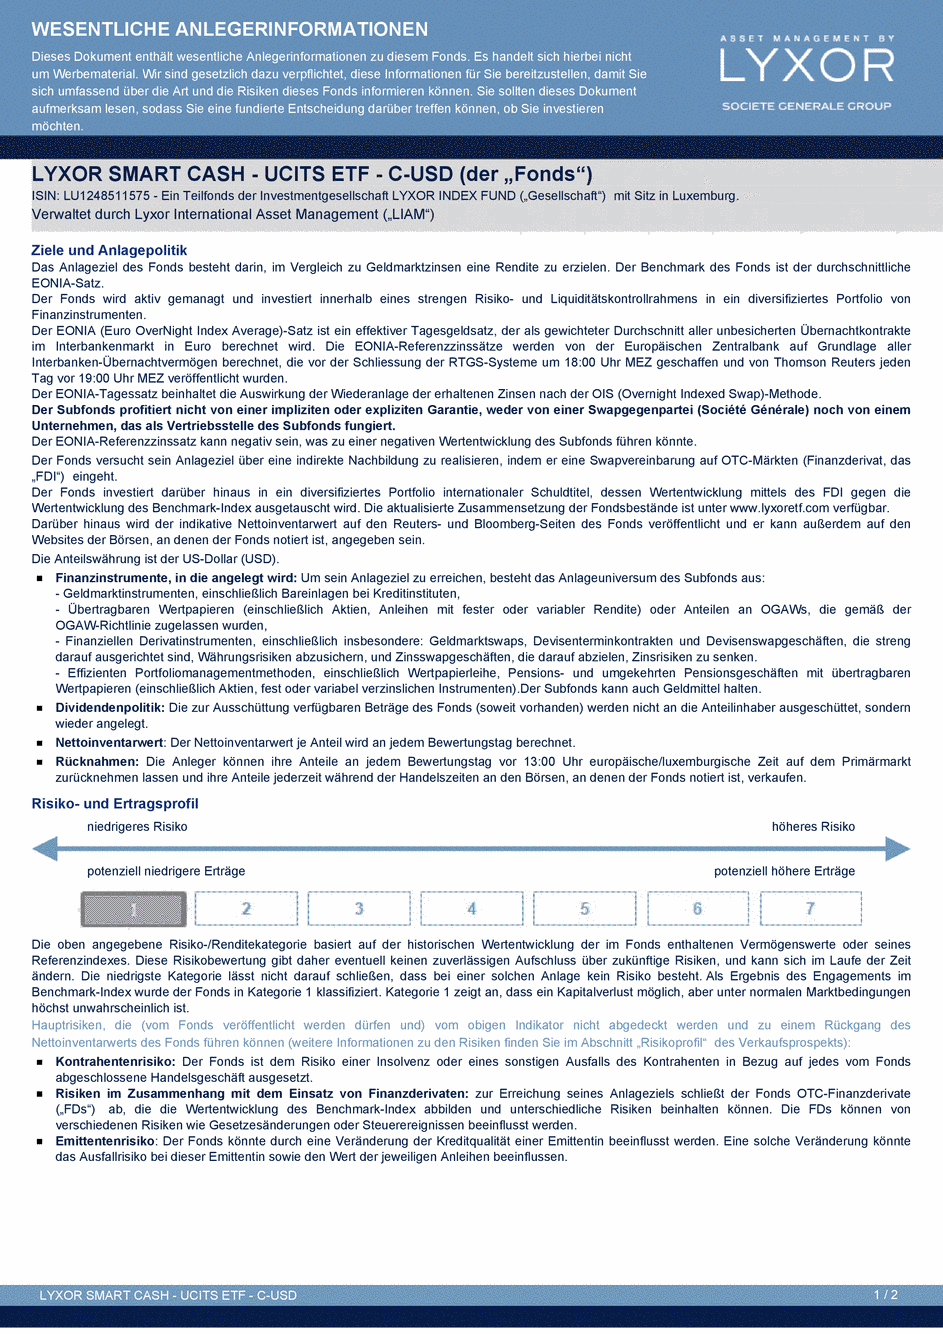 DICI Lyxor Smart Overnight Return - UCITS ETF C-USD - 30/06/2015 - Allemand